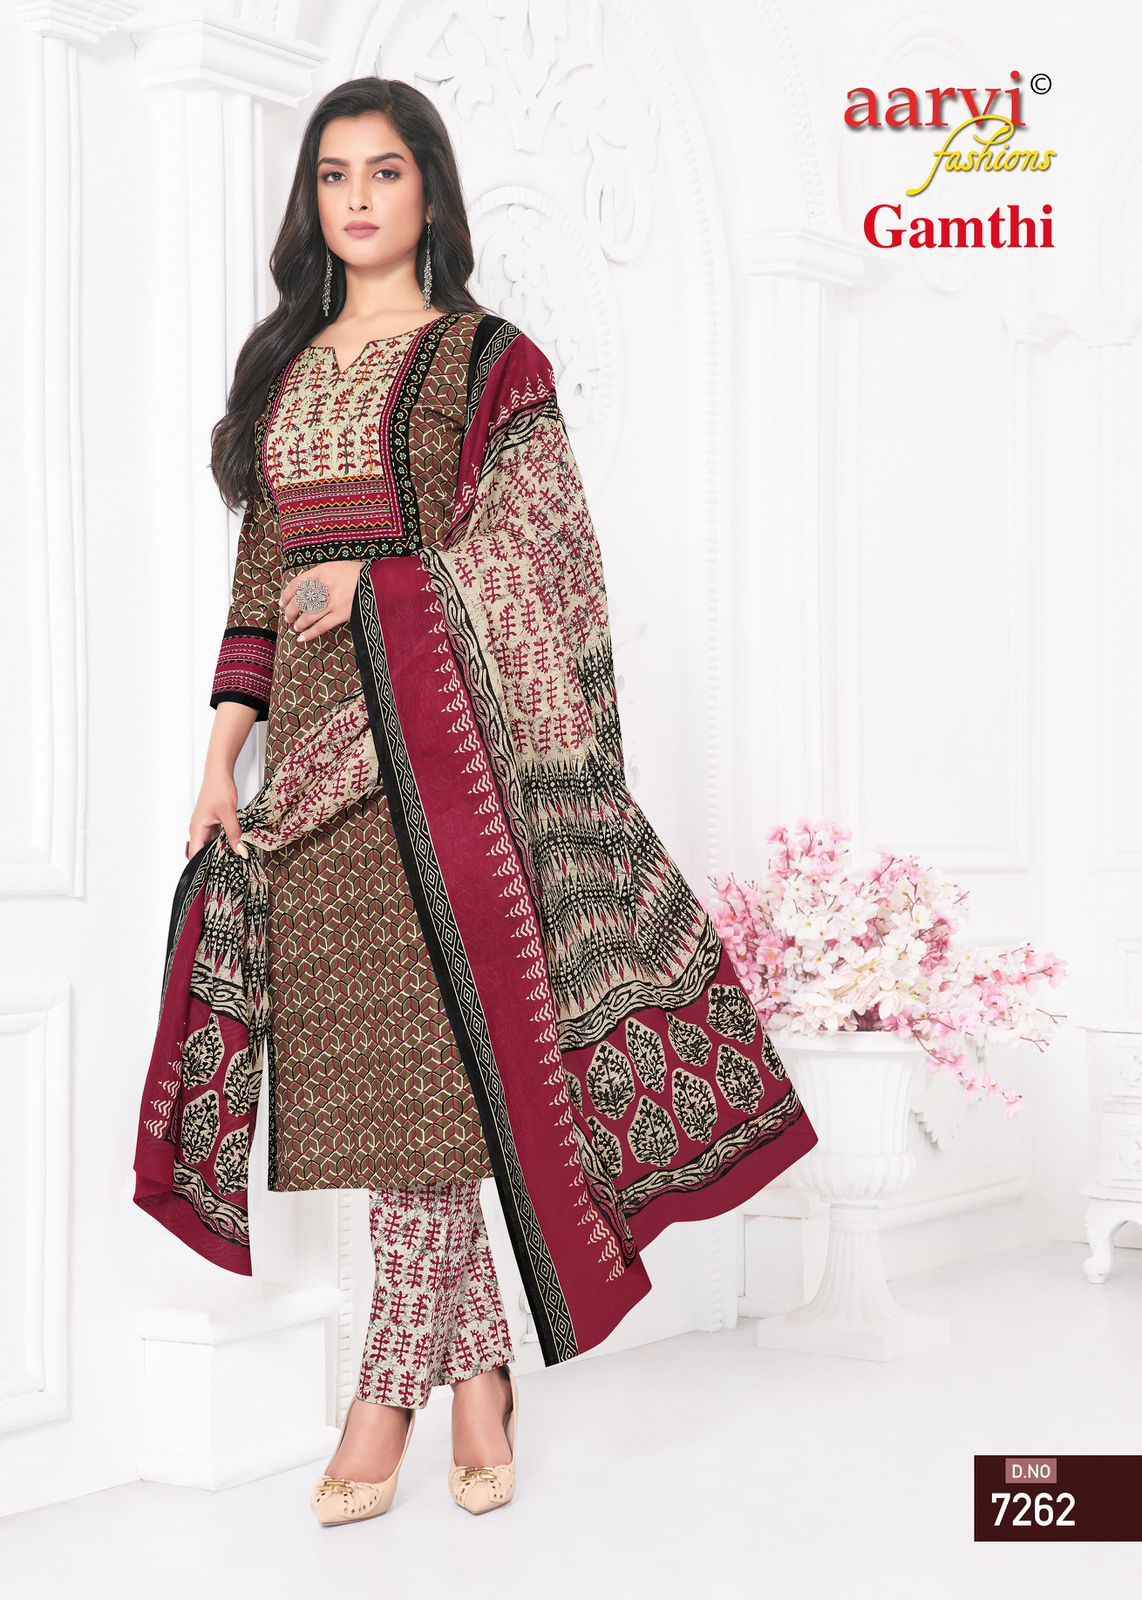 Aarvi Fashion Gamthi Vol-4 Cotton Radymade Suit (10 pcs Catalogue)